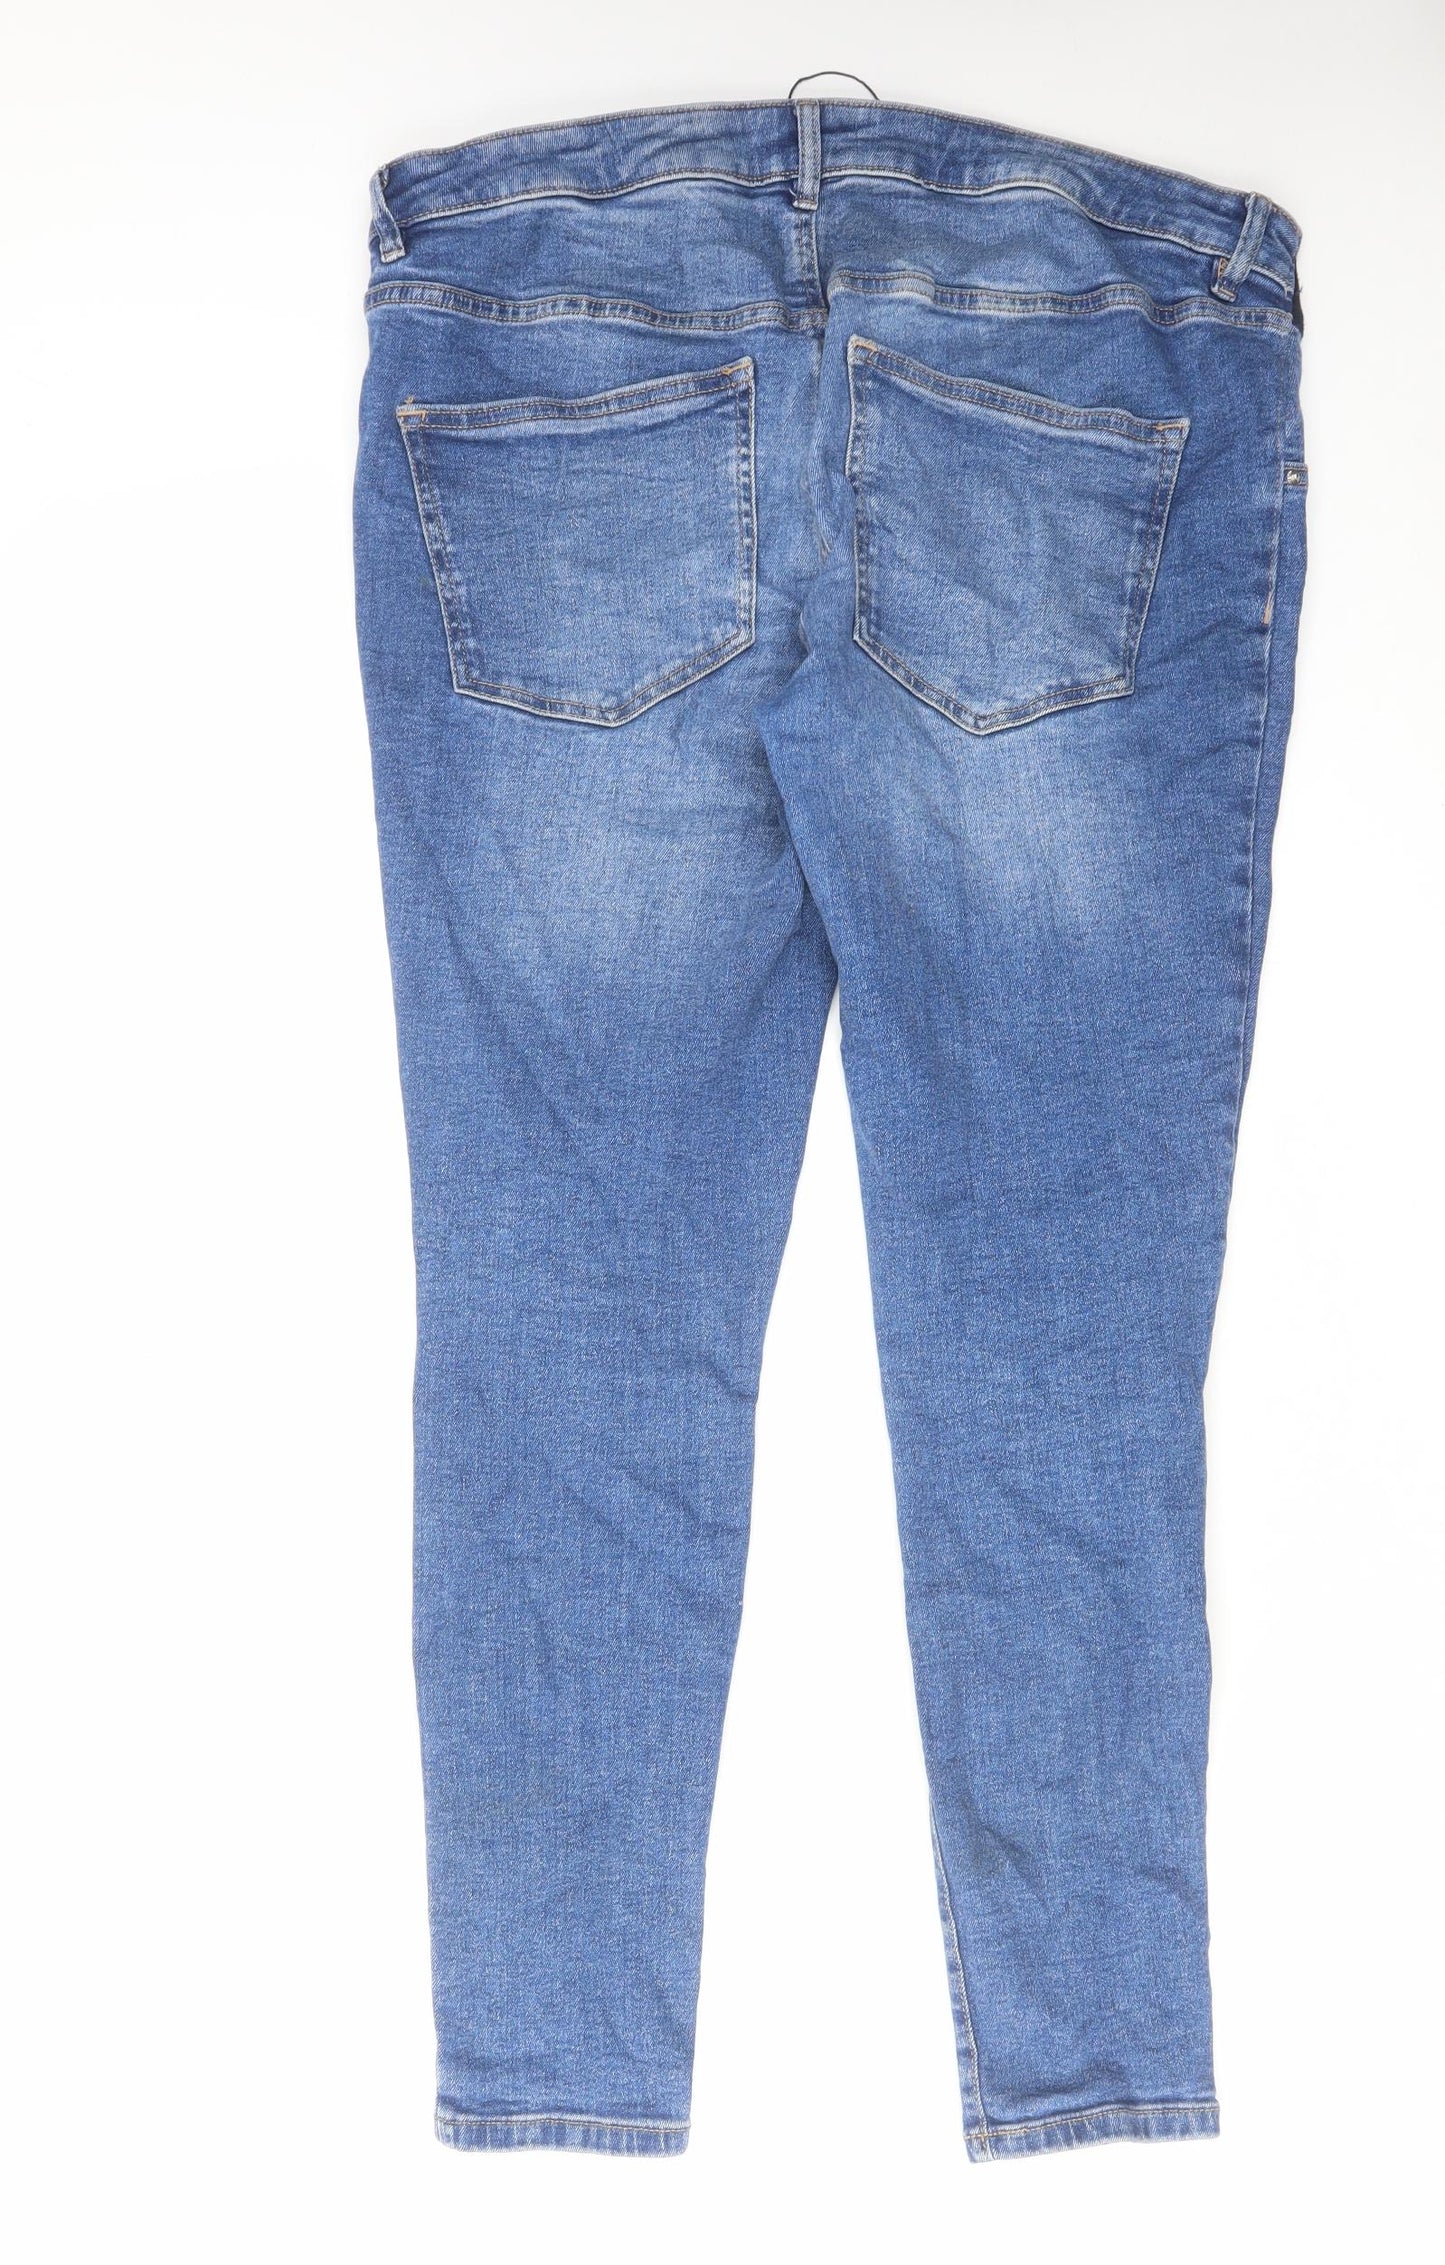 Primark Womens Blue Cotton Skinny Jeans Size 16 L30 in Regular